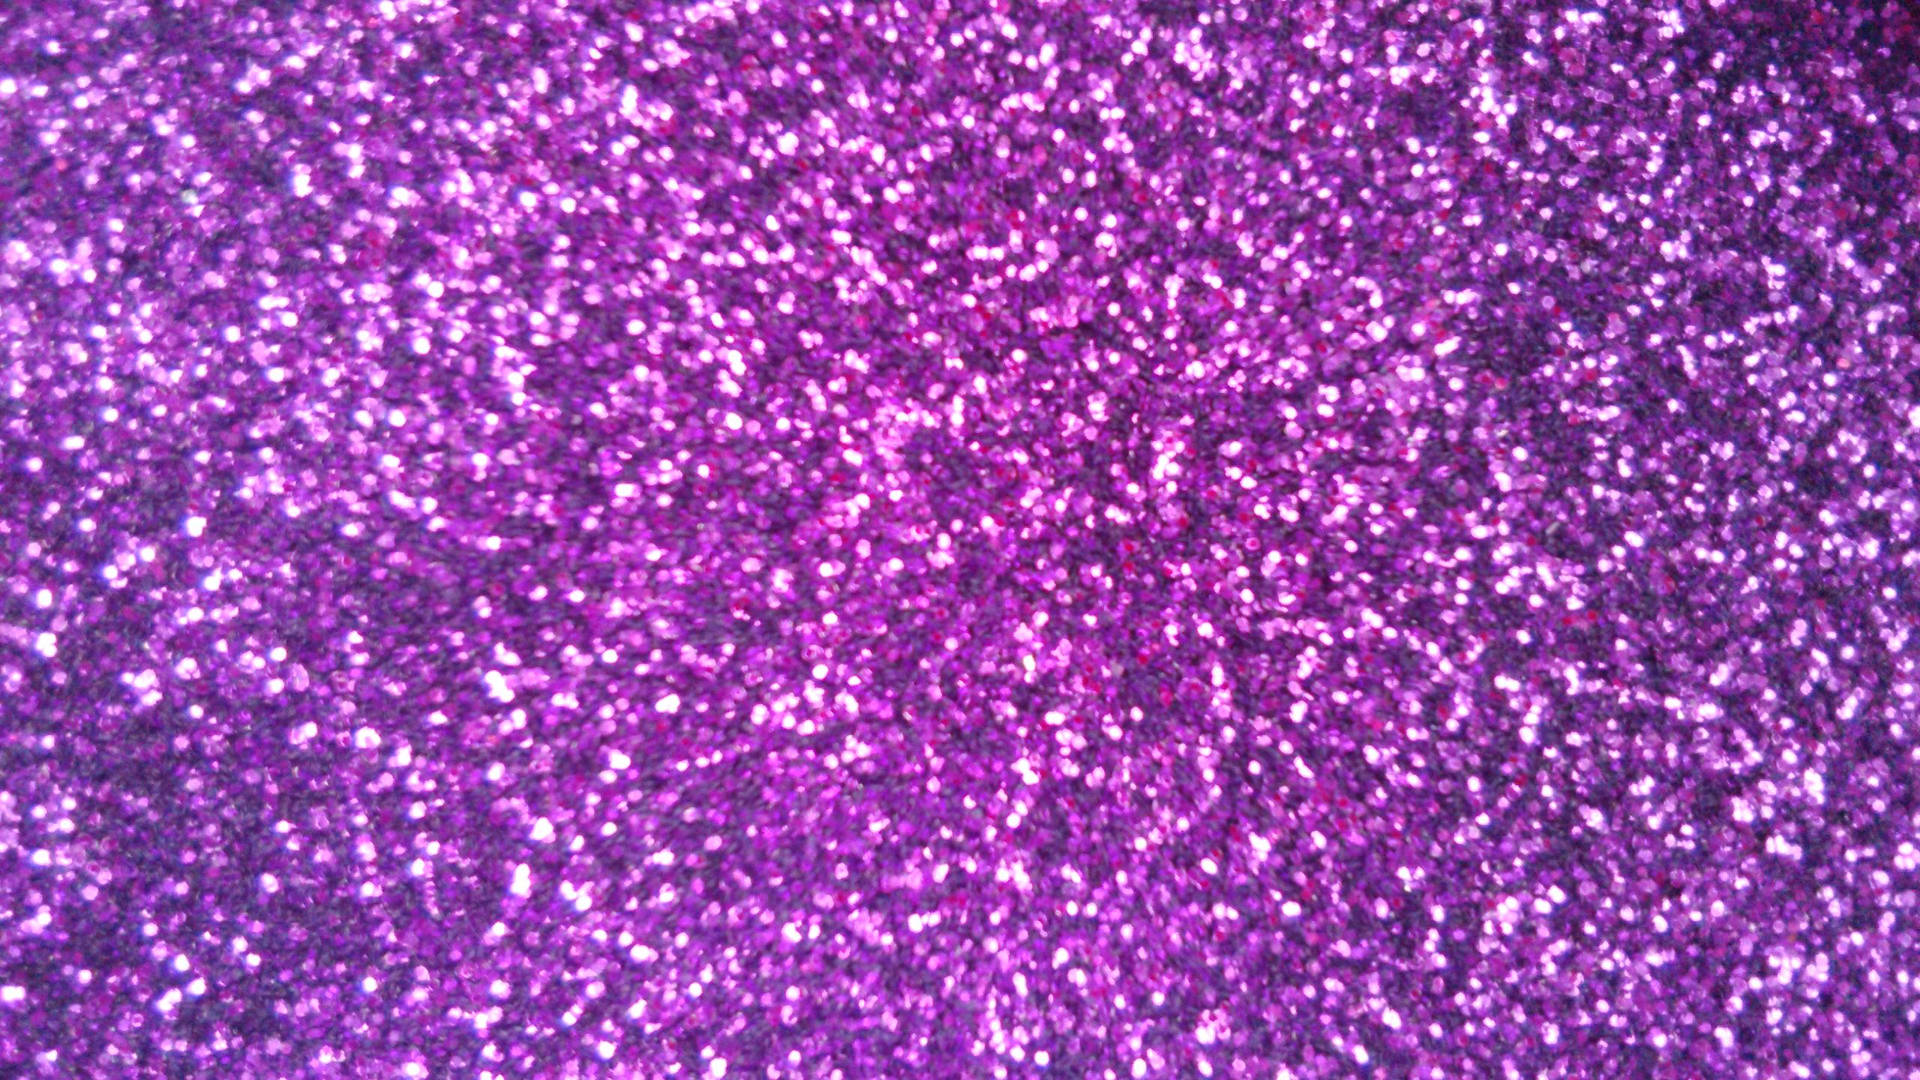 Bright Sparkly Violet Texture Wallpaper